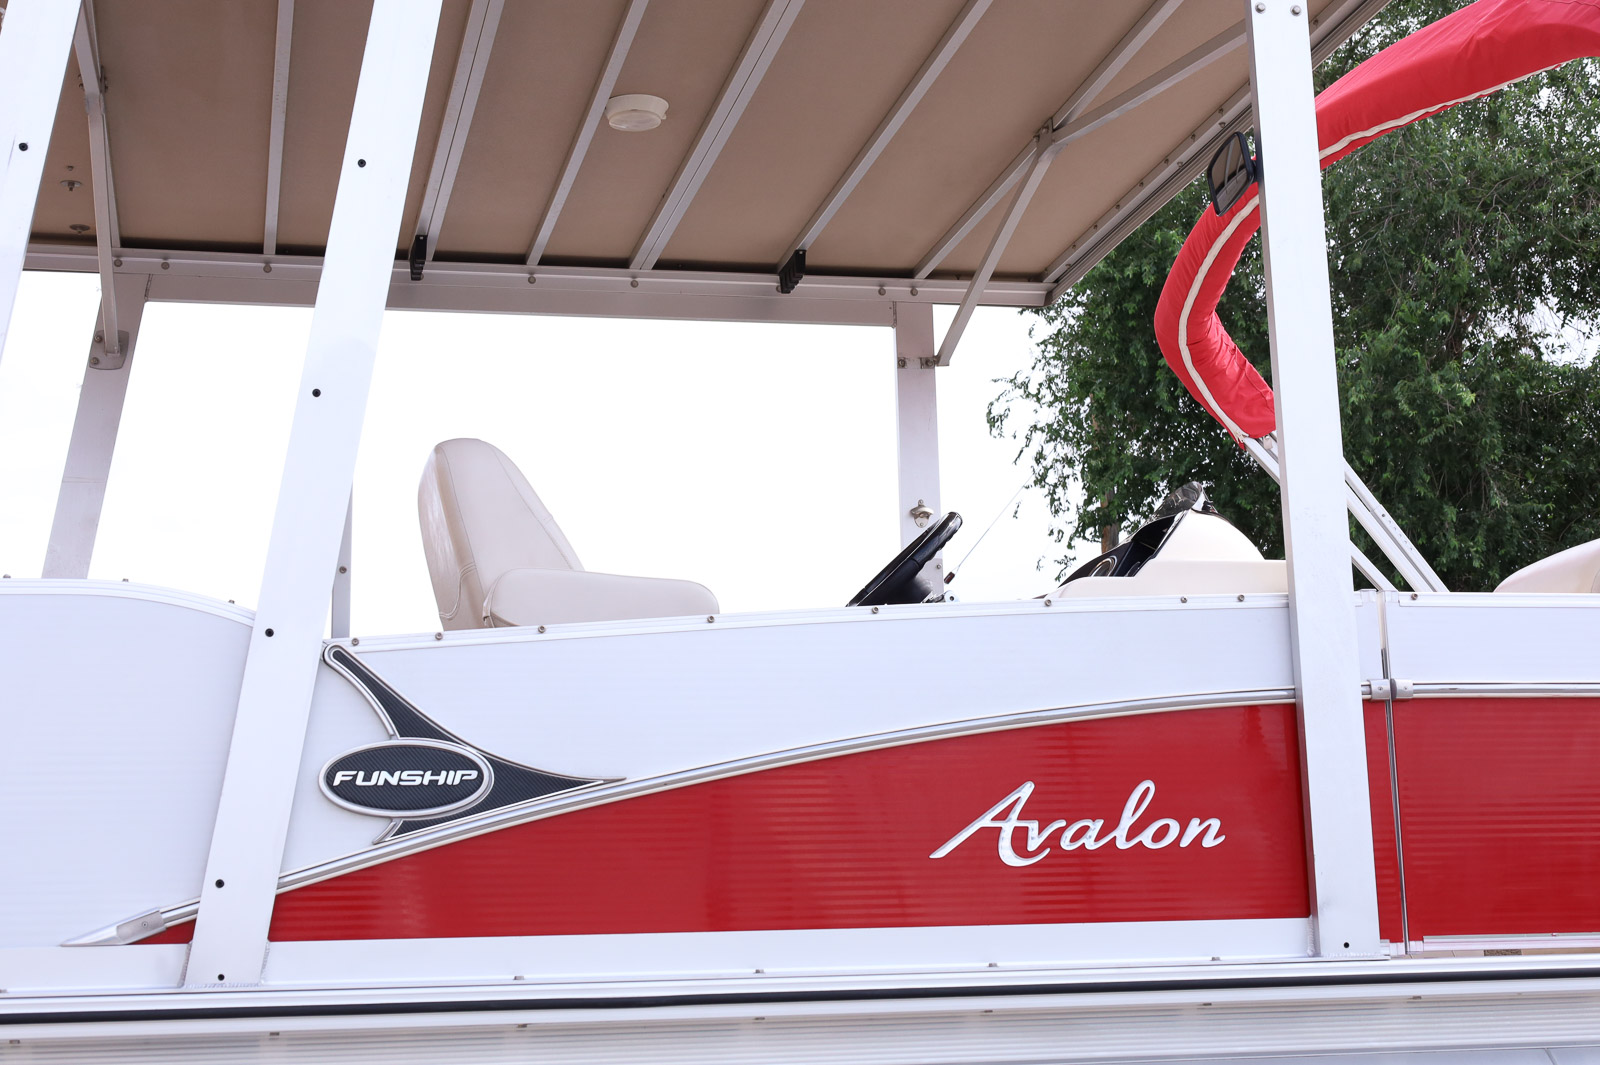 Pre-Owned 2015 Avalon Paradise Funship 2685fs